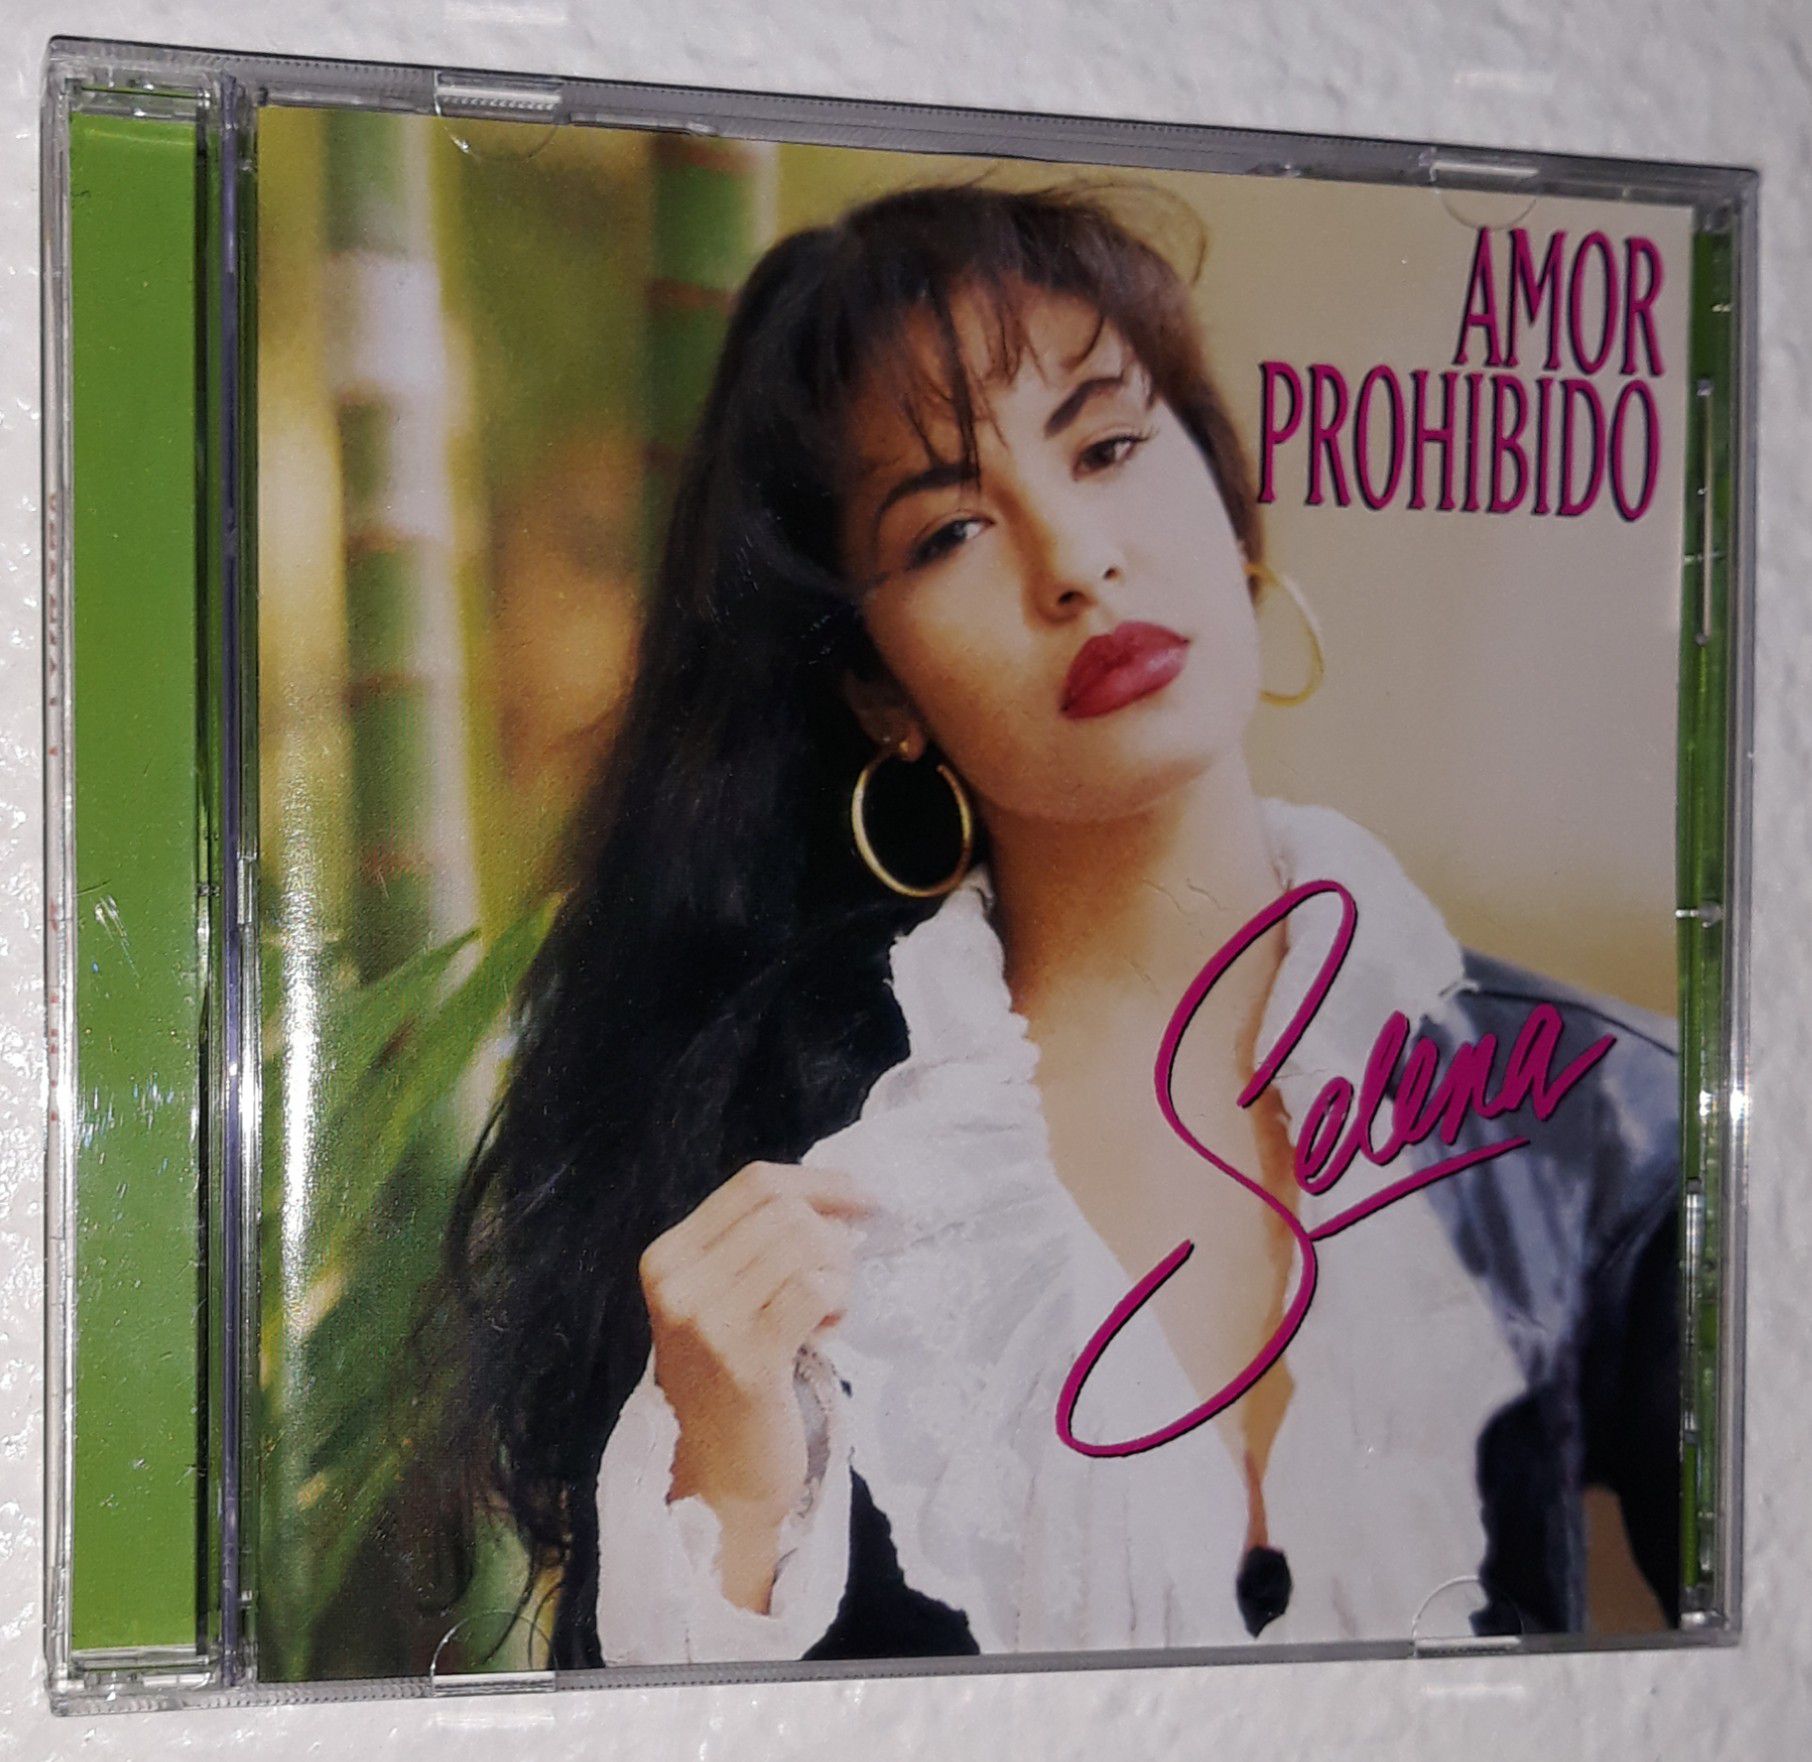 CD Amor Prohibido by Selena (1994)